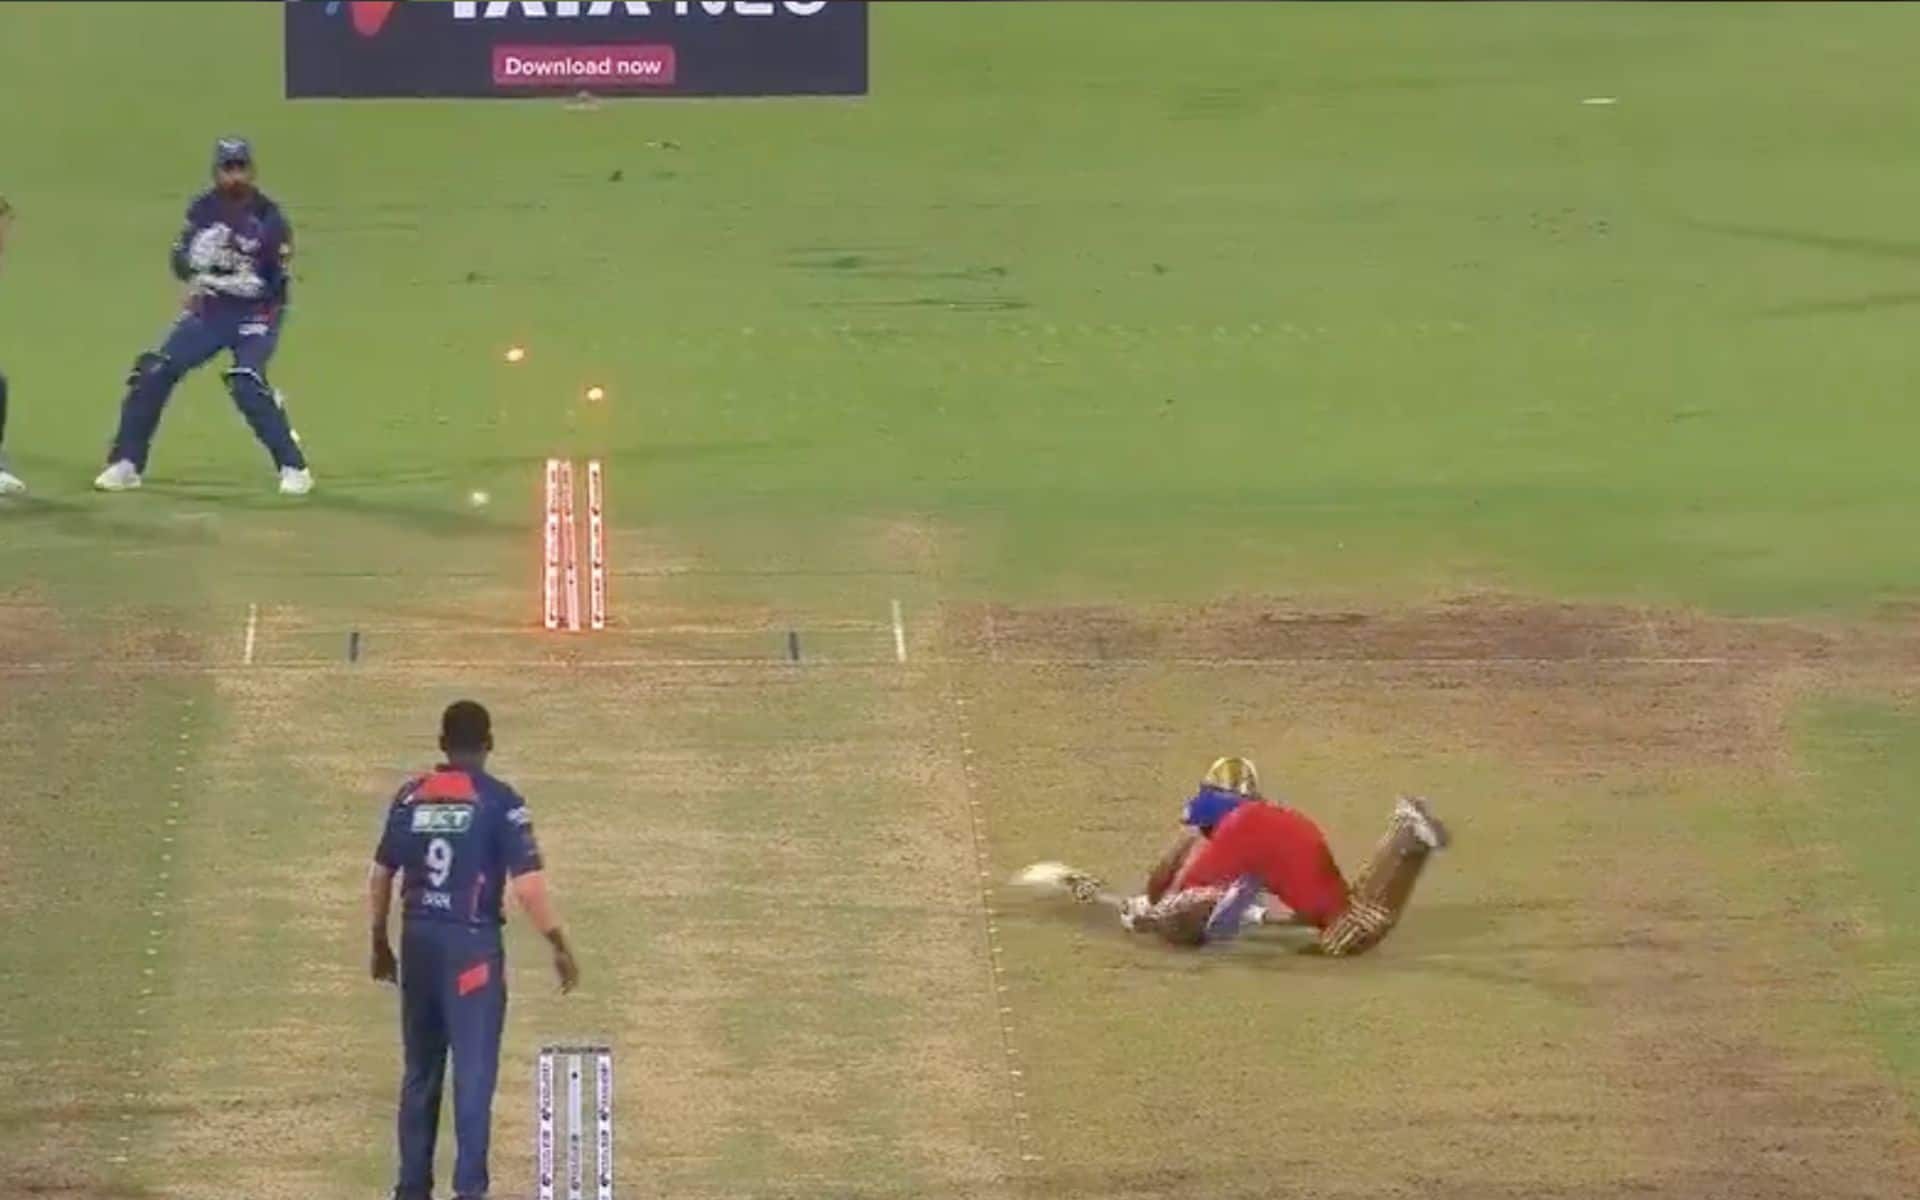 Mayank Dagar fell as he ran towards the wicket (Twitter)
